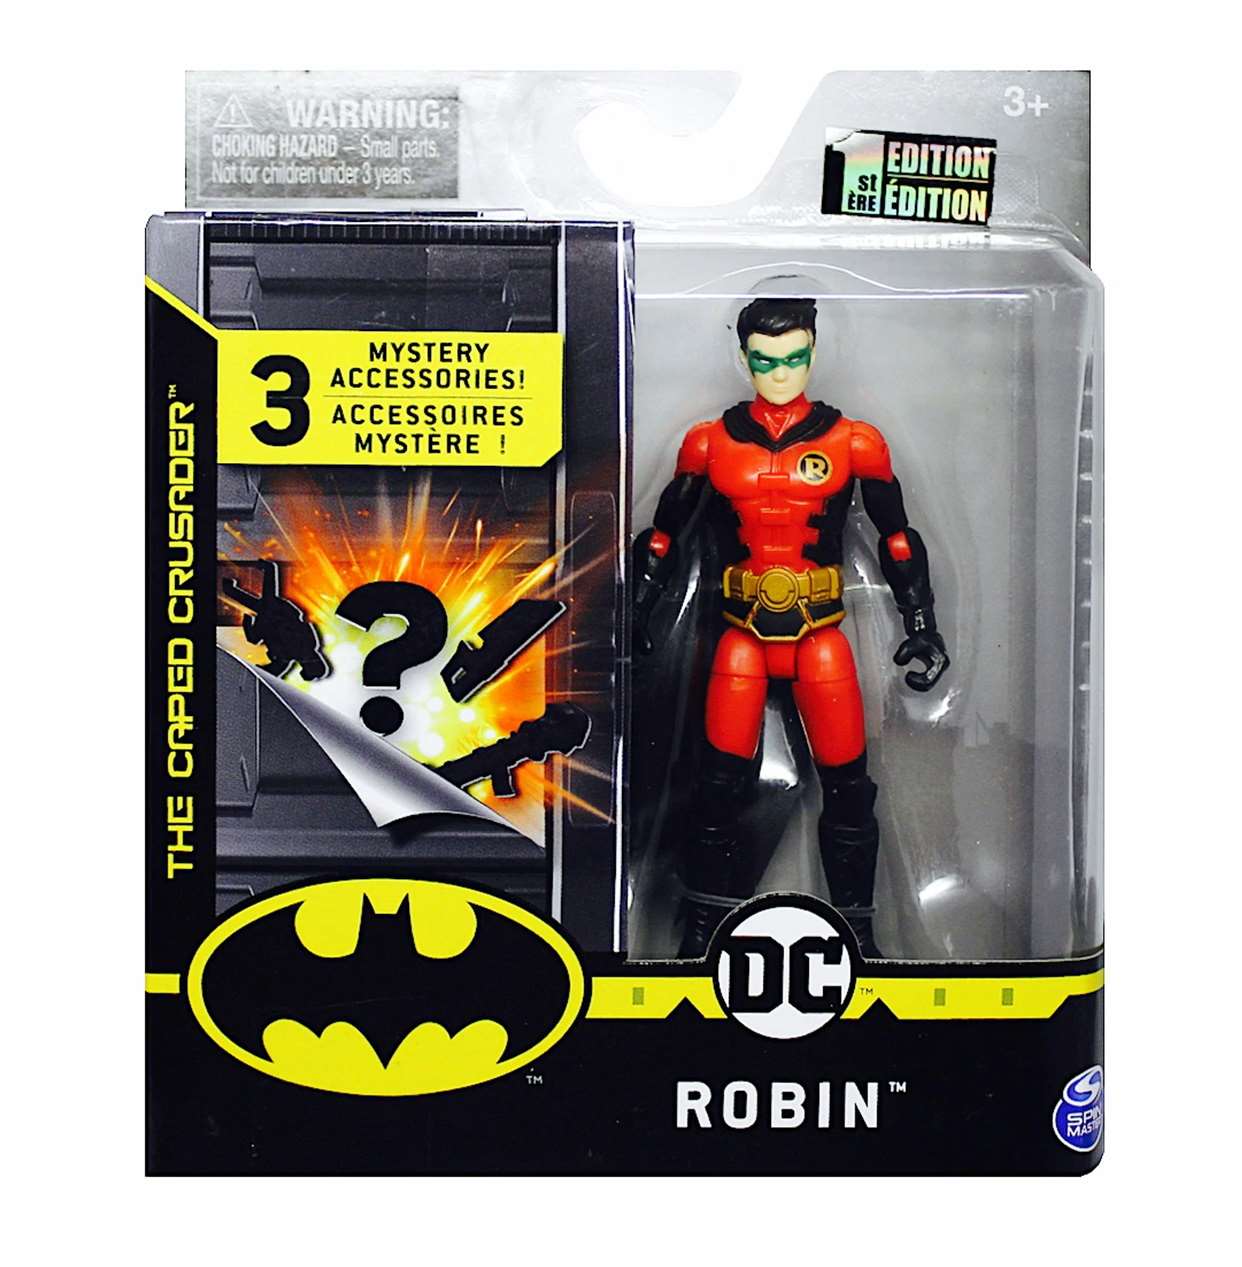 Robin 1er Edition Figura Batman The Caped Crusader 3 PuLG